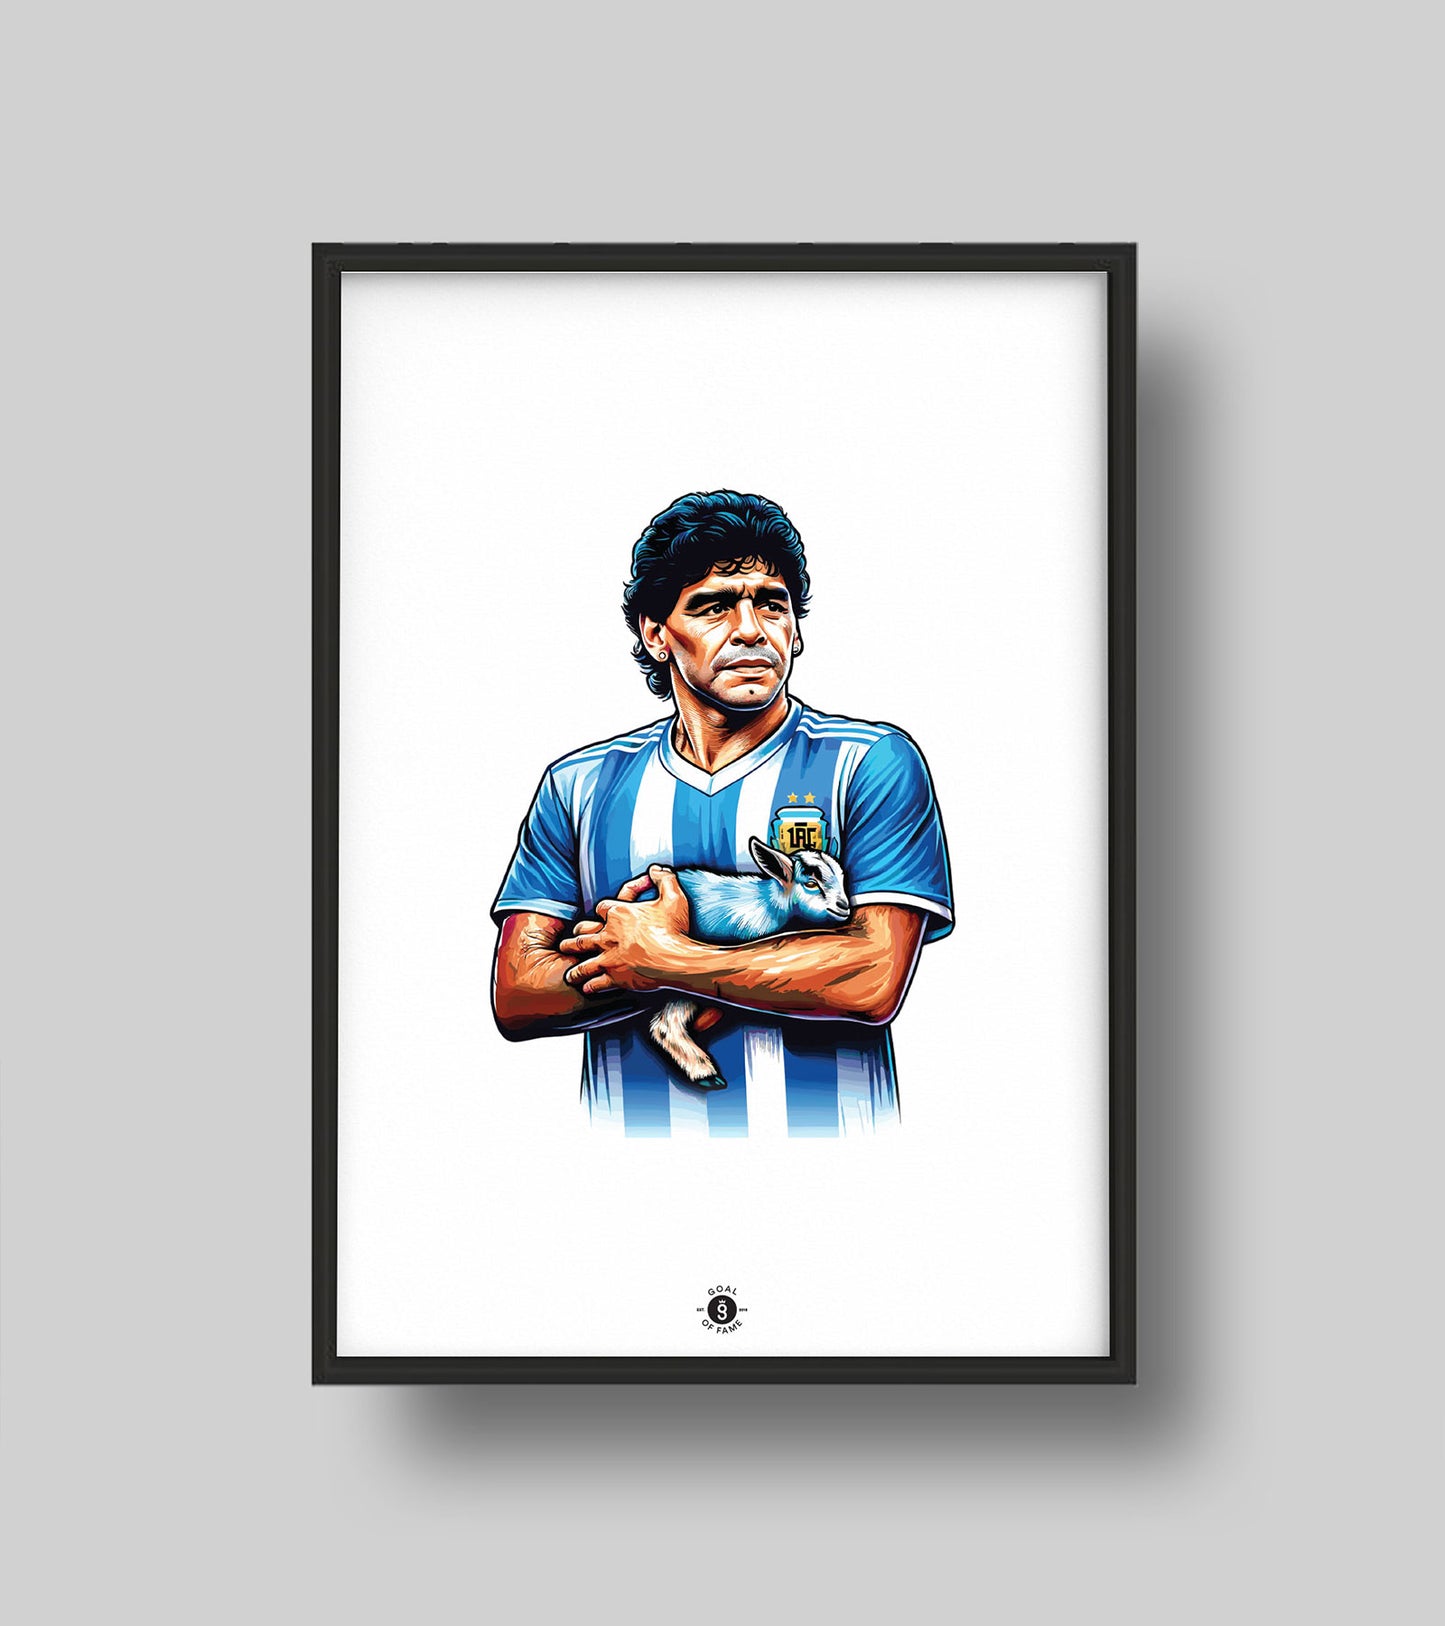 Maradona is the G.O.A.T